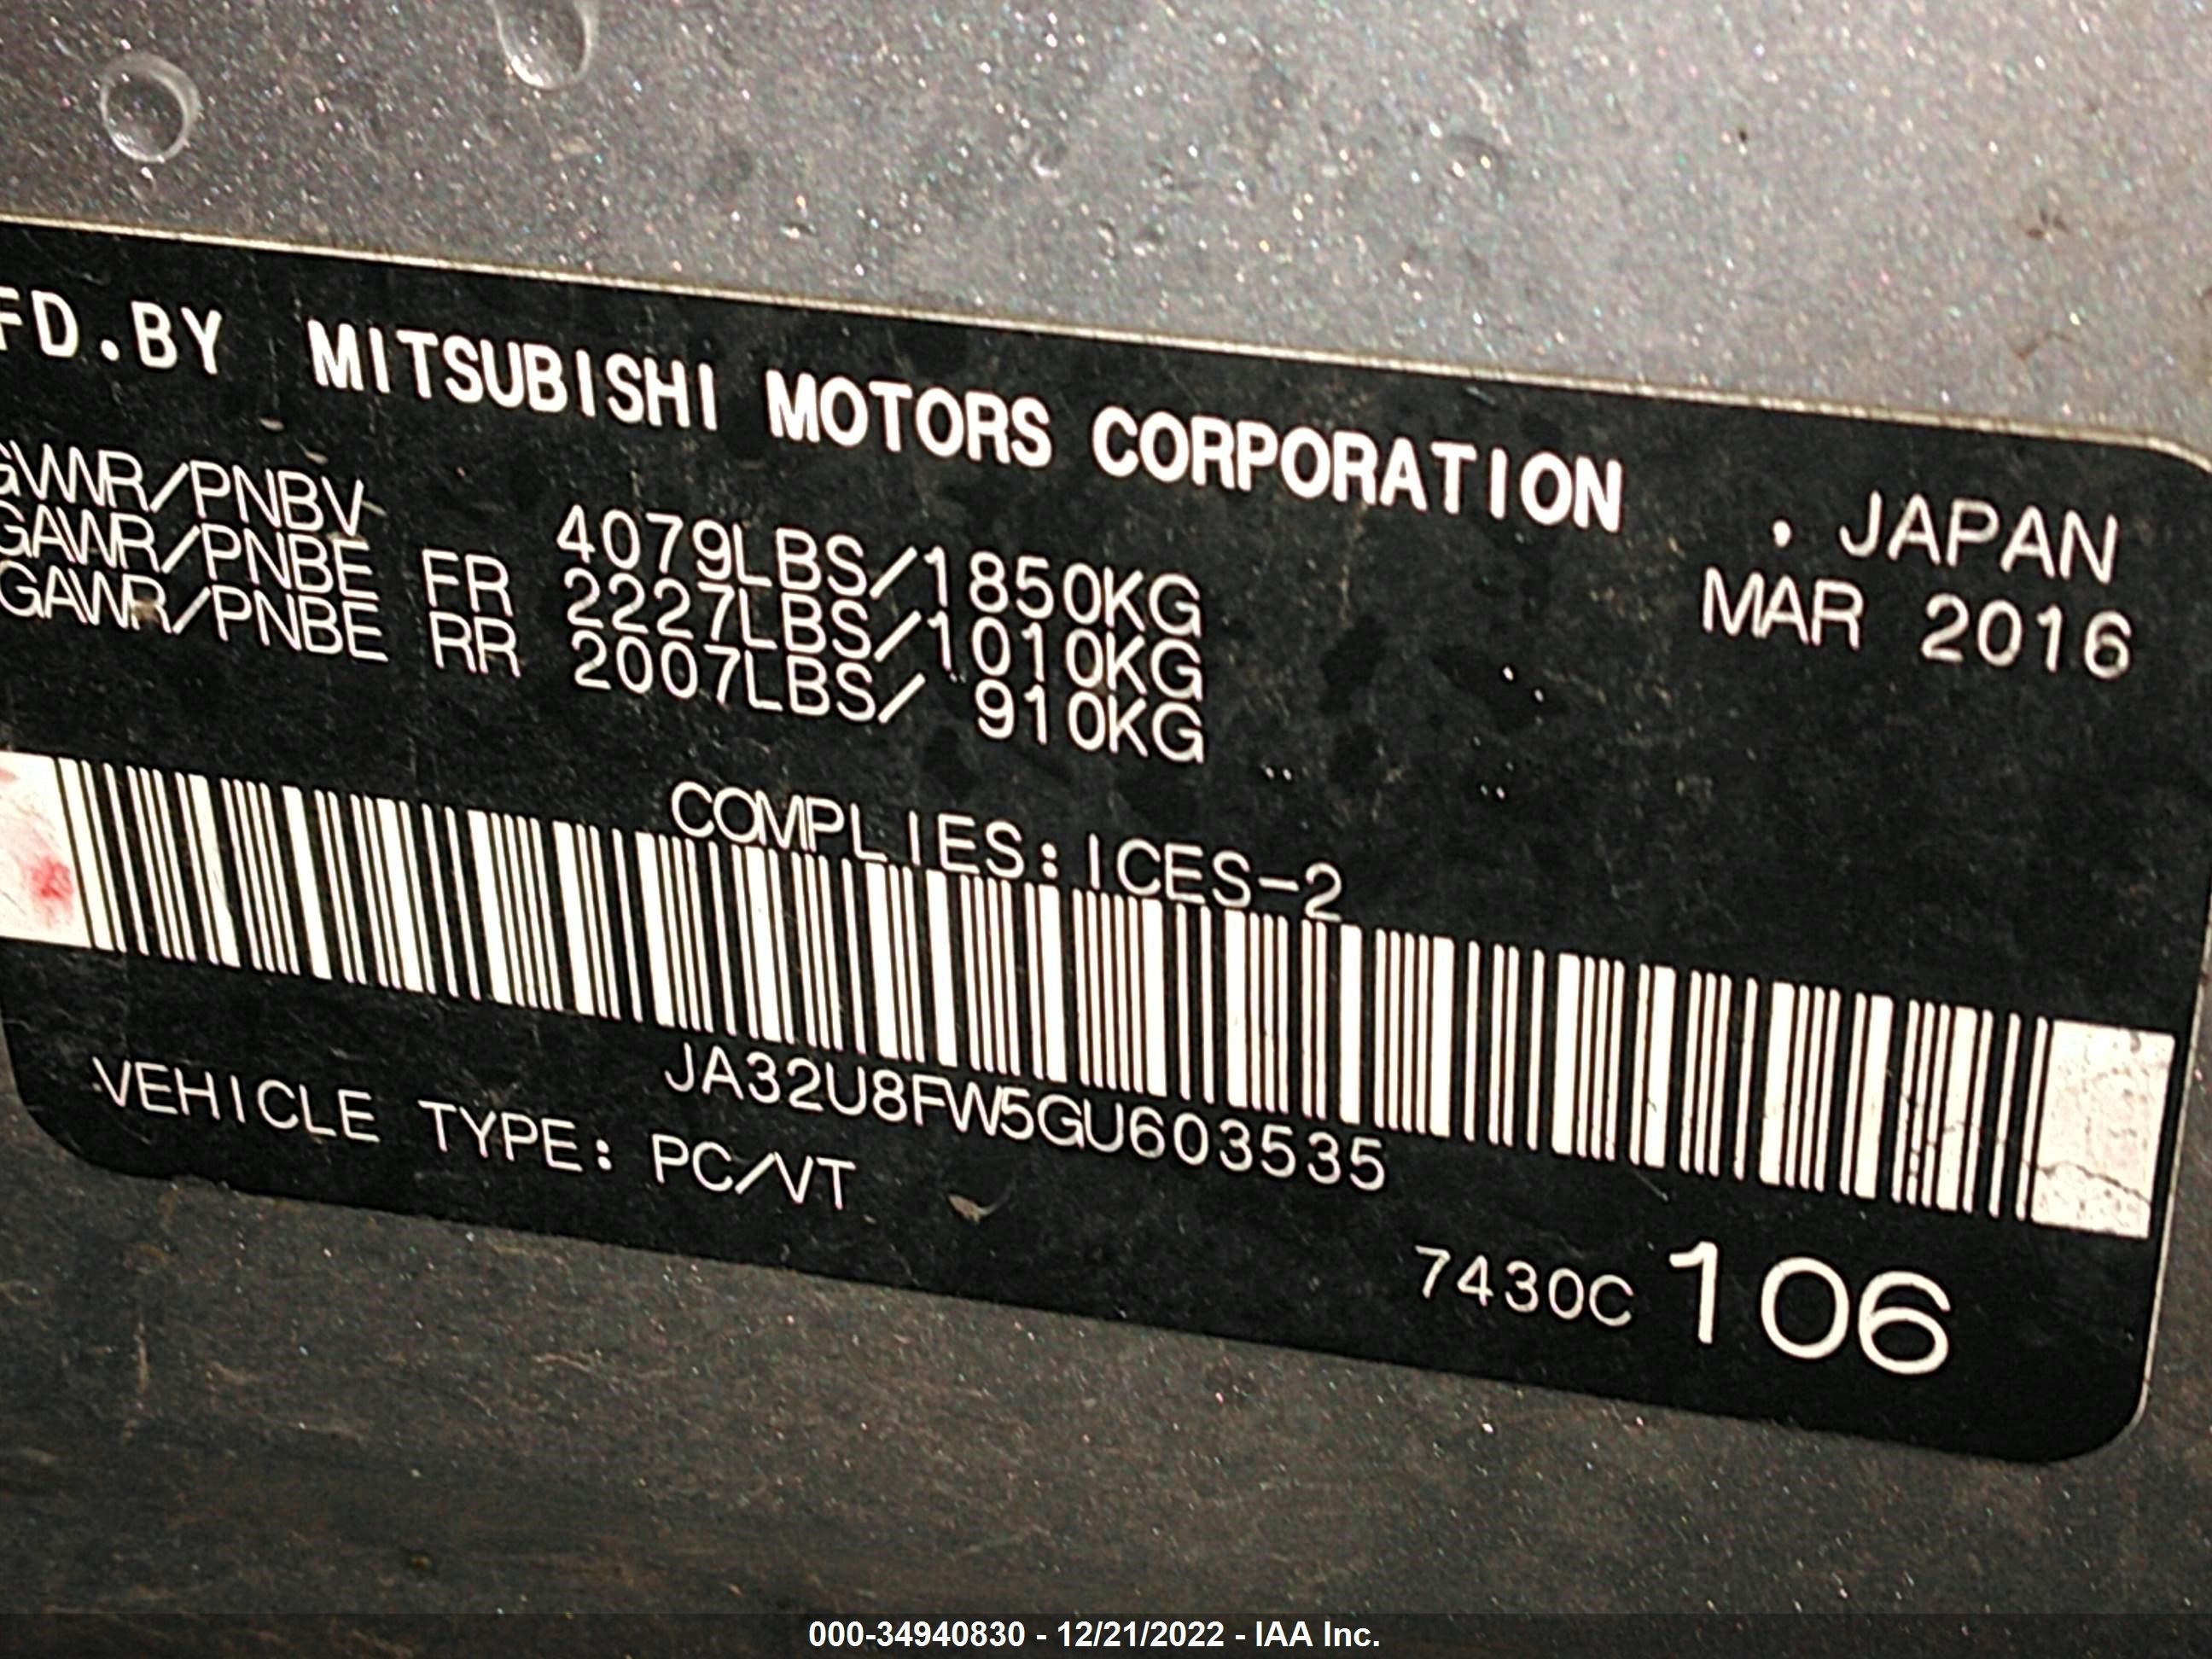 2016 MITSUBISHI LANCER GT VIN: 0032U8FW5GU603535